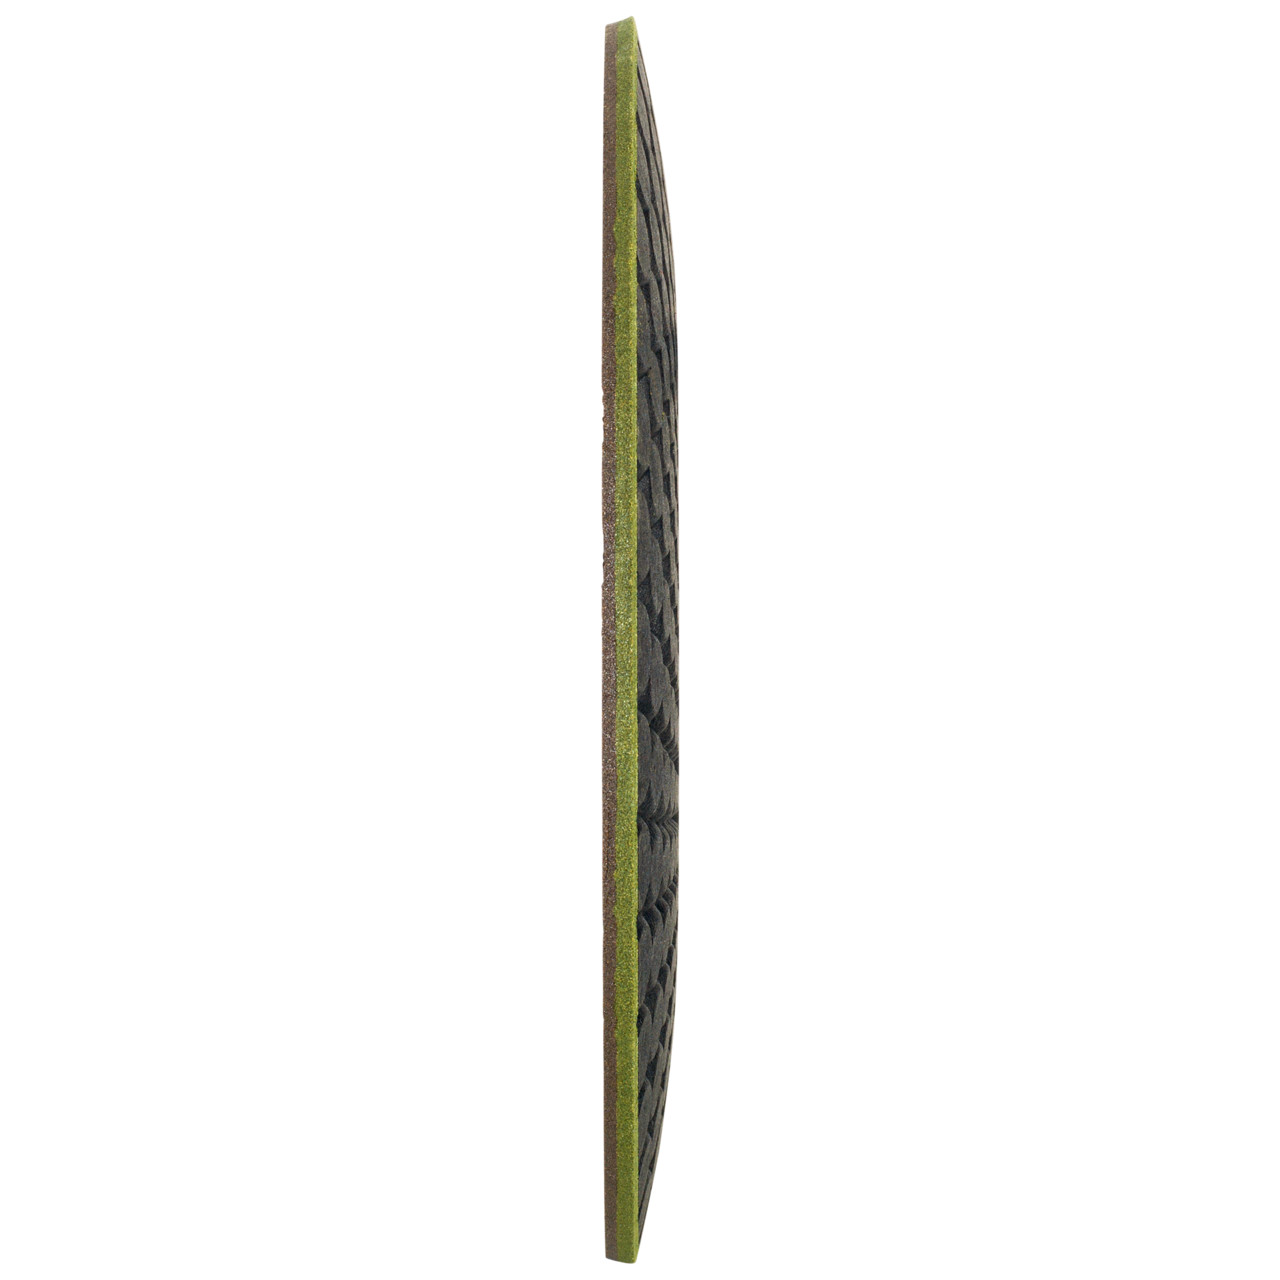 TYROLIT RONDELLER DxH 115x22.23 Para piedra, forma: 29RON (Rondeller®), Art. 908233